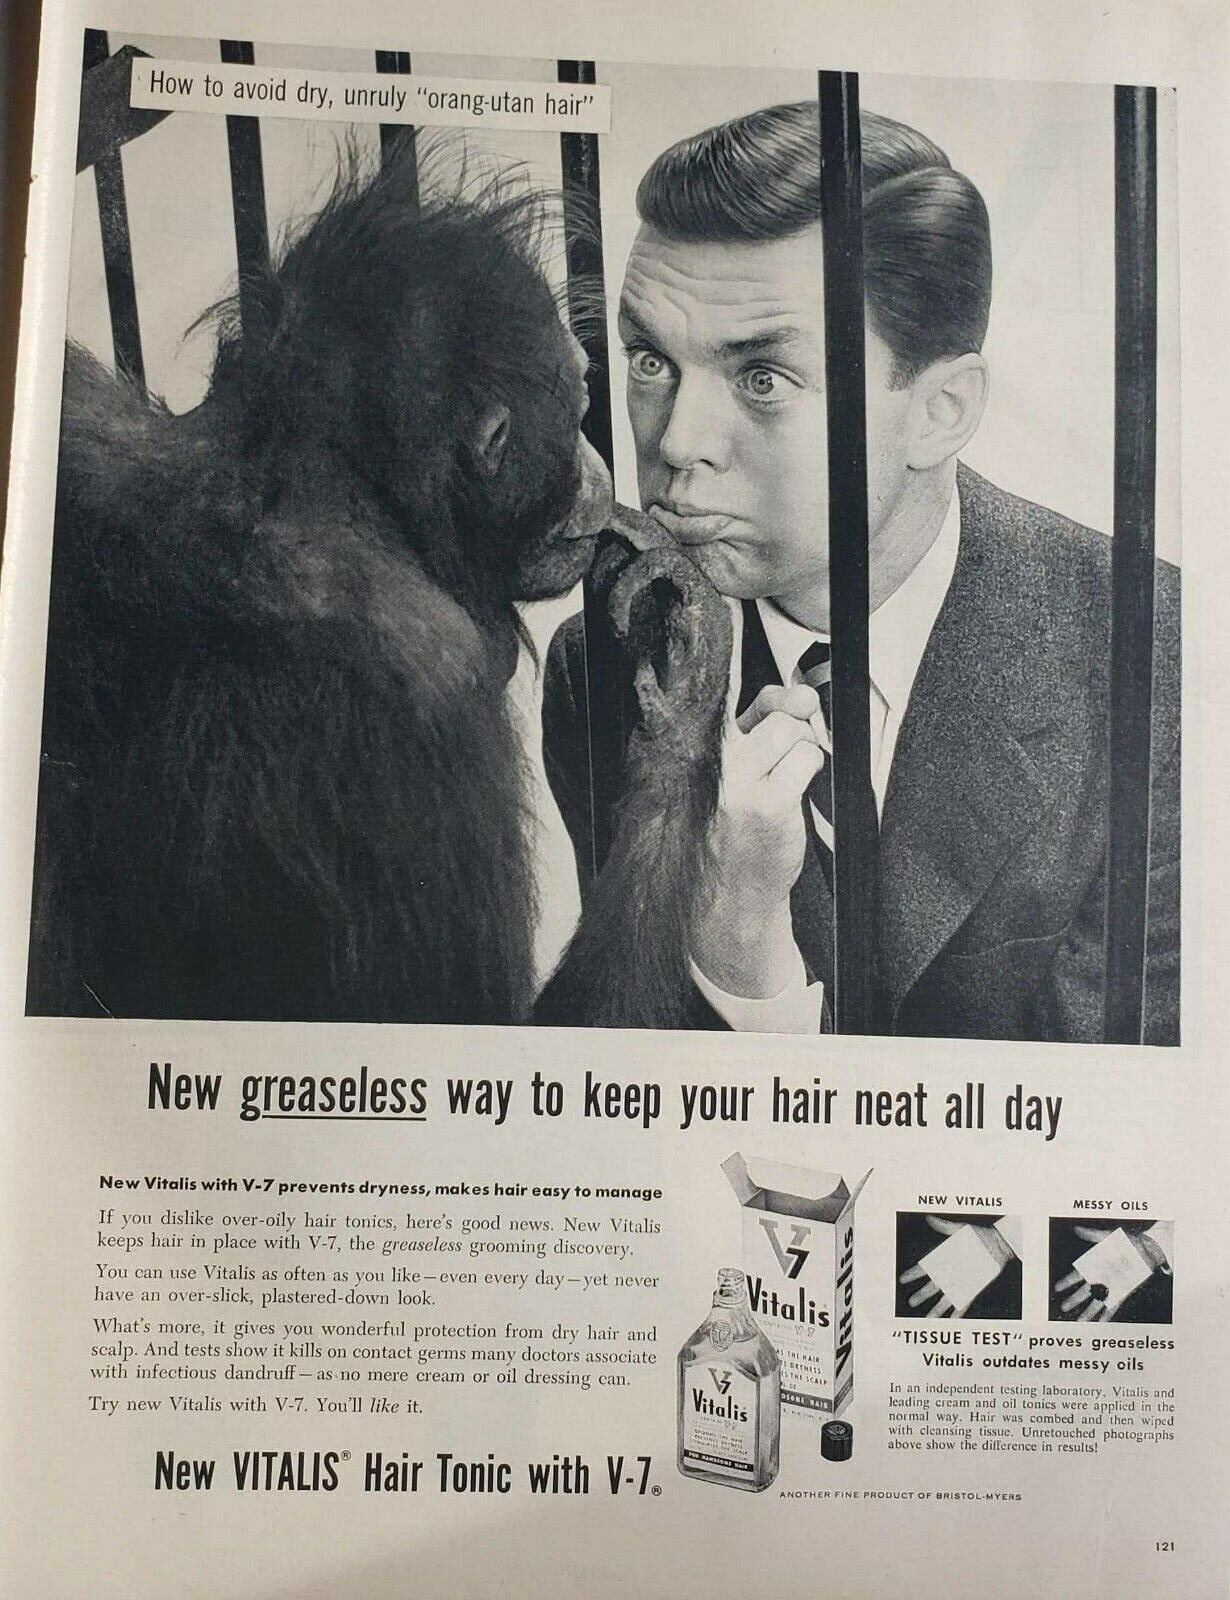 Lot 11 Vintage Vitalis Hair Tonic with V-7 Print Ads Jungle Floor Mop